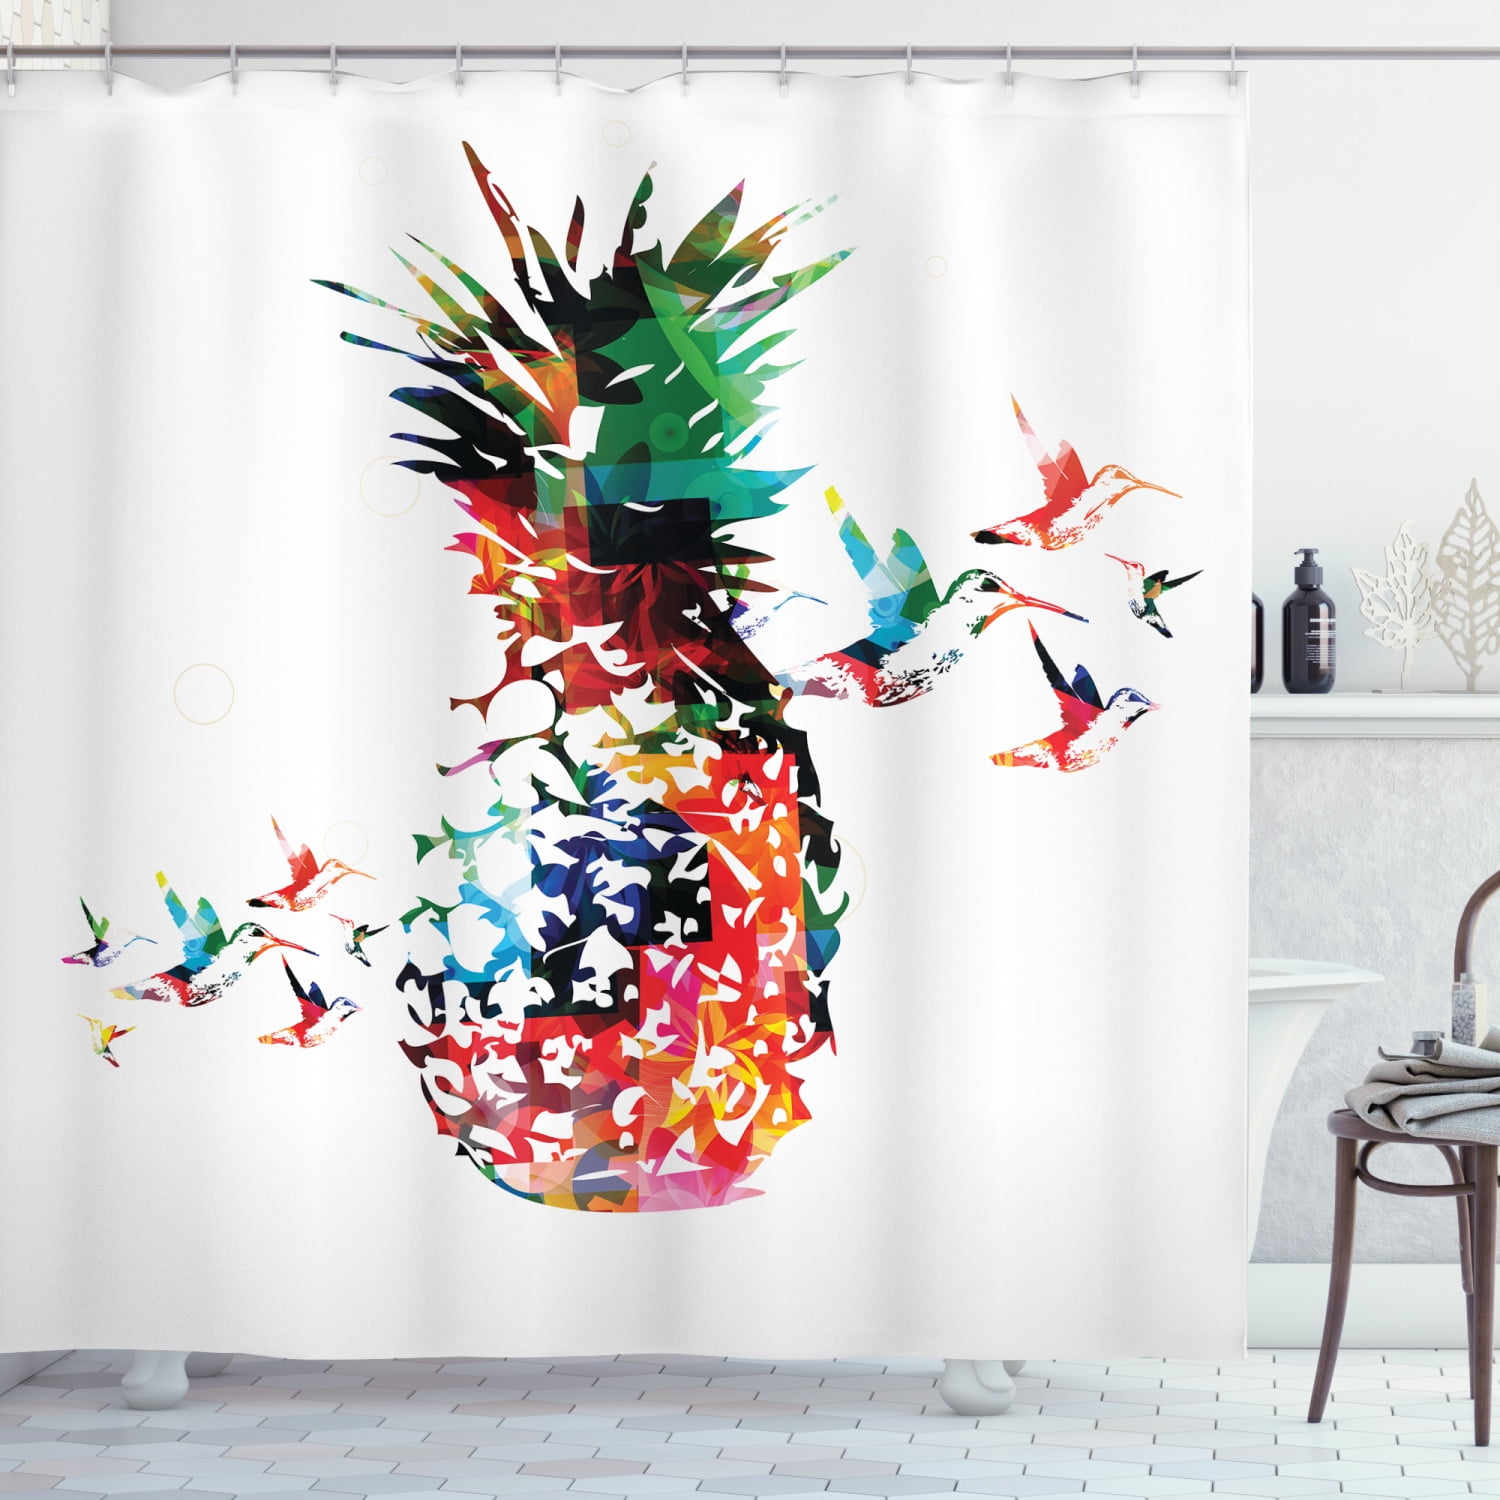 Waterproof Fabric Shower Curtain Set Tropical Flowers Pineapple Bathroom & Hooks 